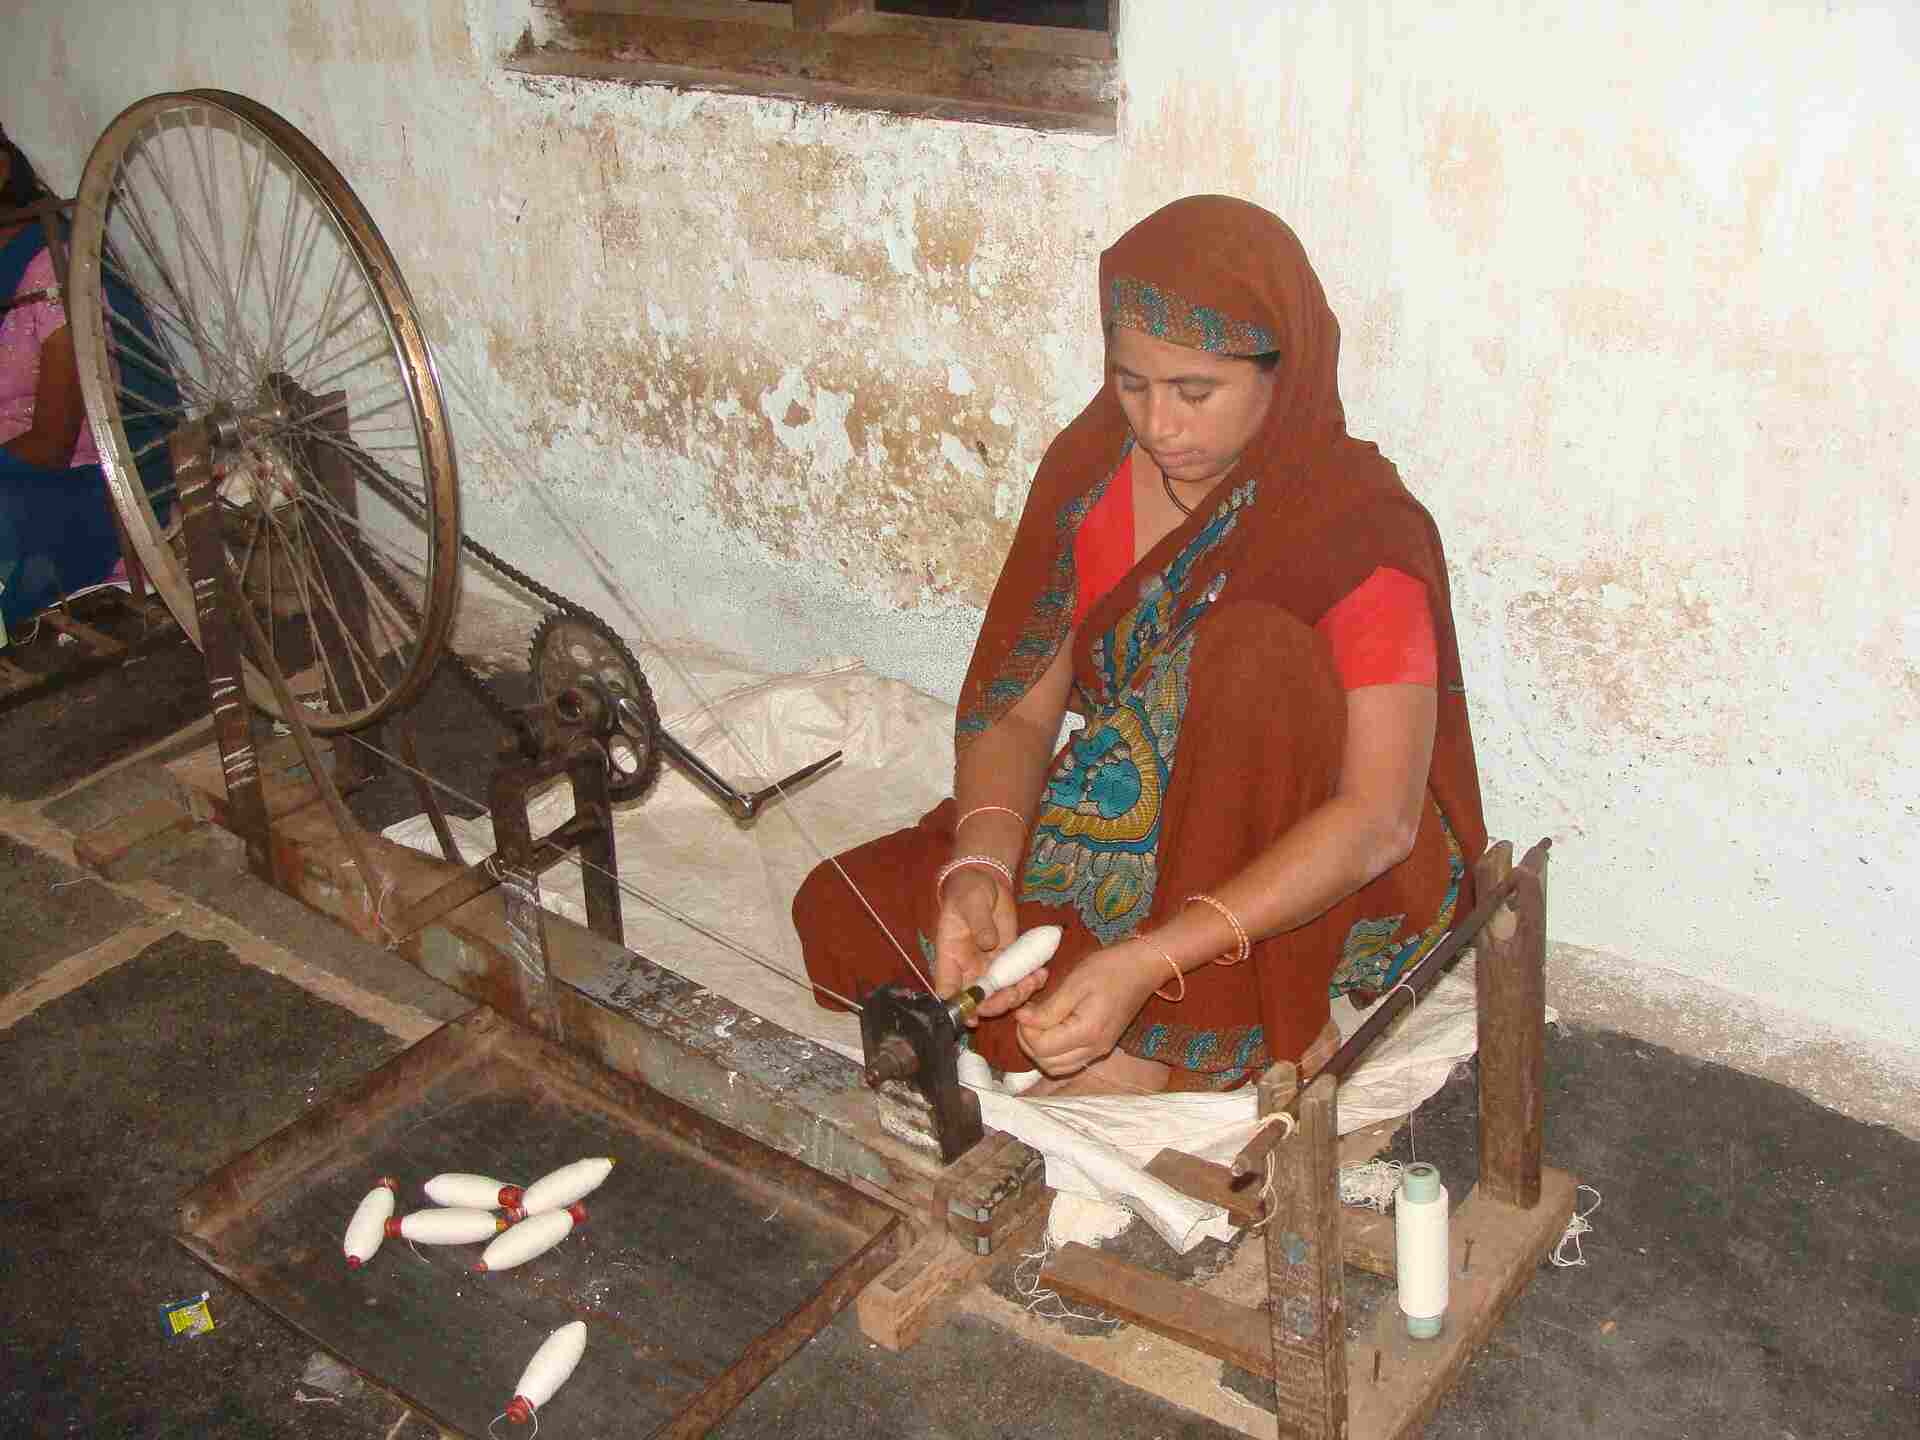 An Indian woman spinning Khadi on a charkha